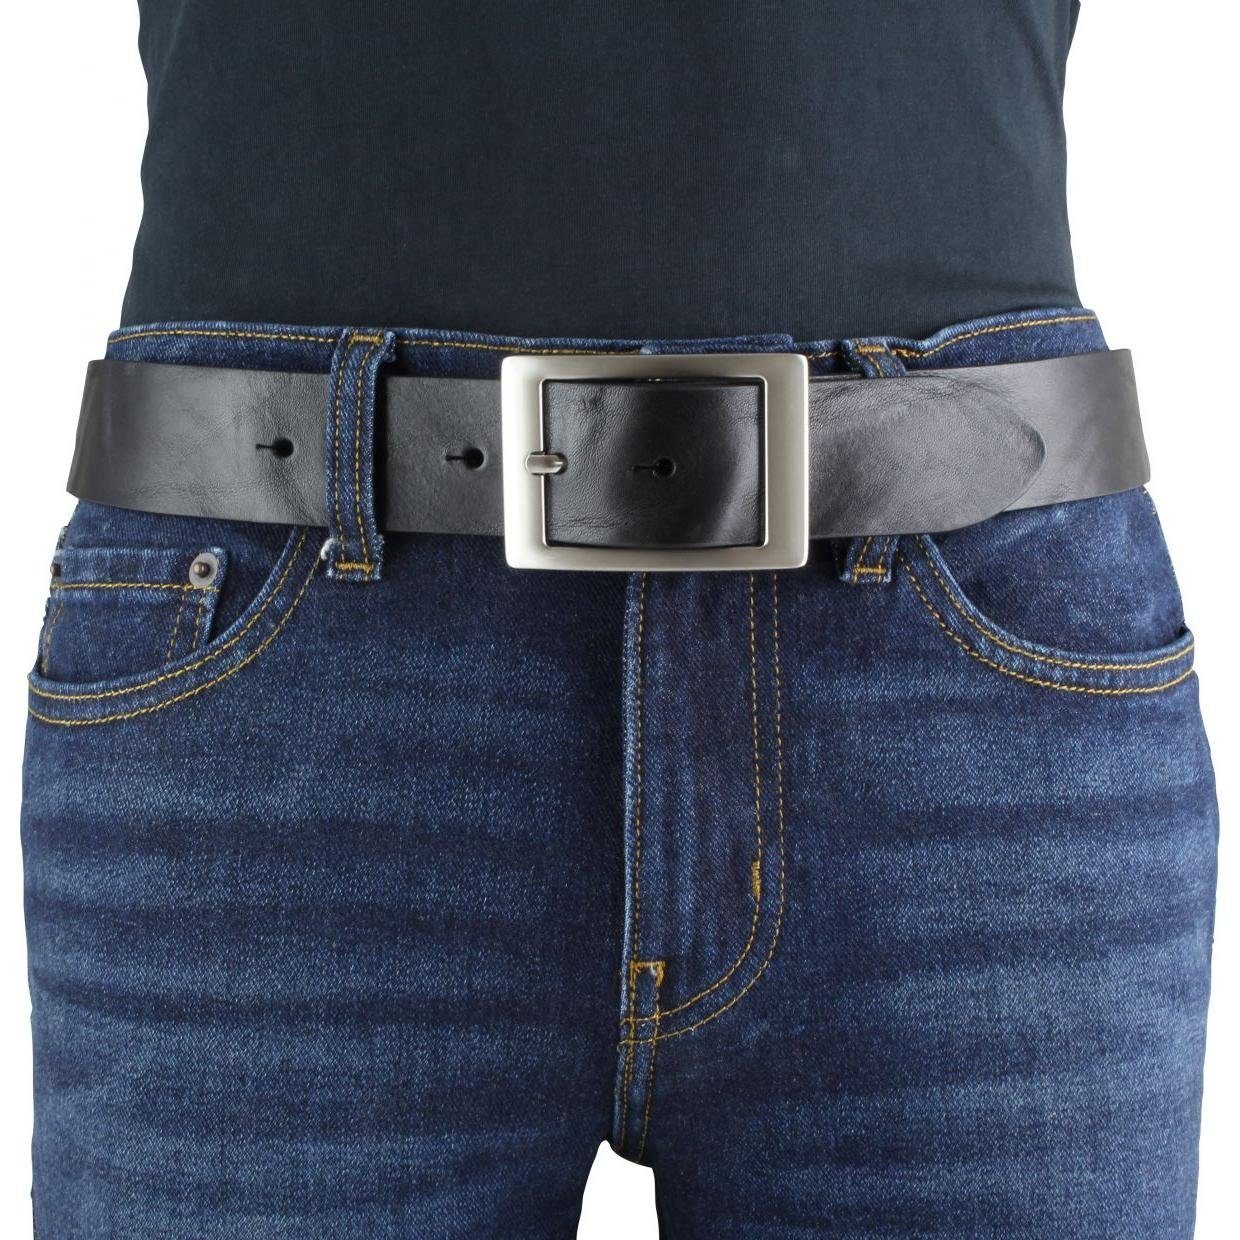 Jeans-Gü Gürtel aus BELTINGER Vollrindleder - mit Doppel-Schließe Chocolate, Ledergürtel Used-Look cm 4 Silber